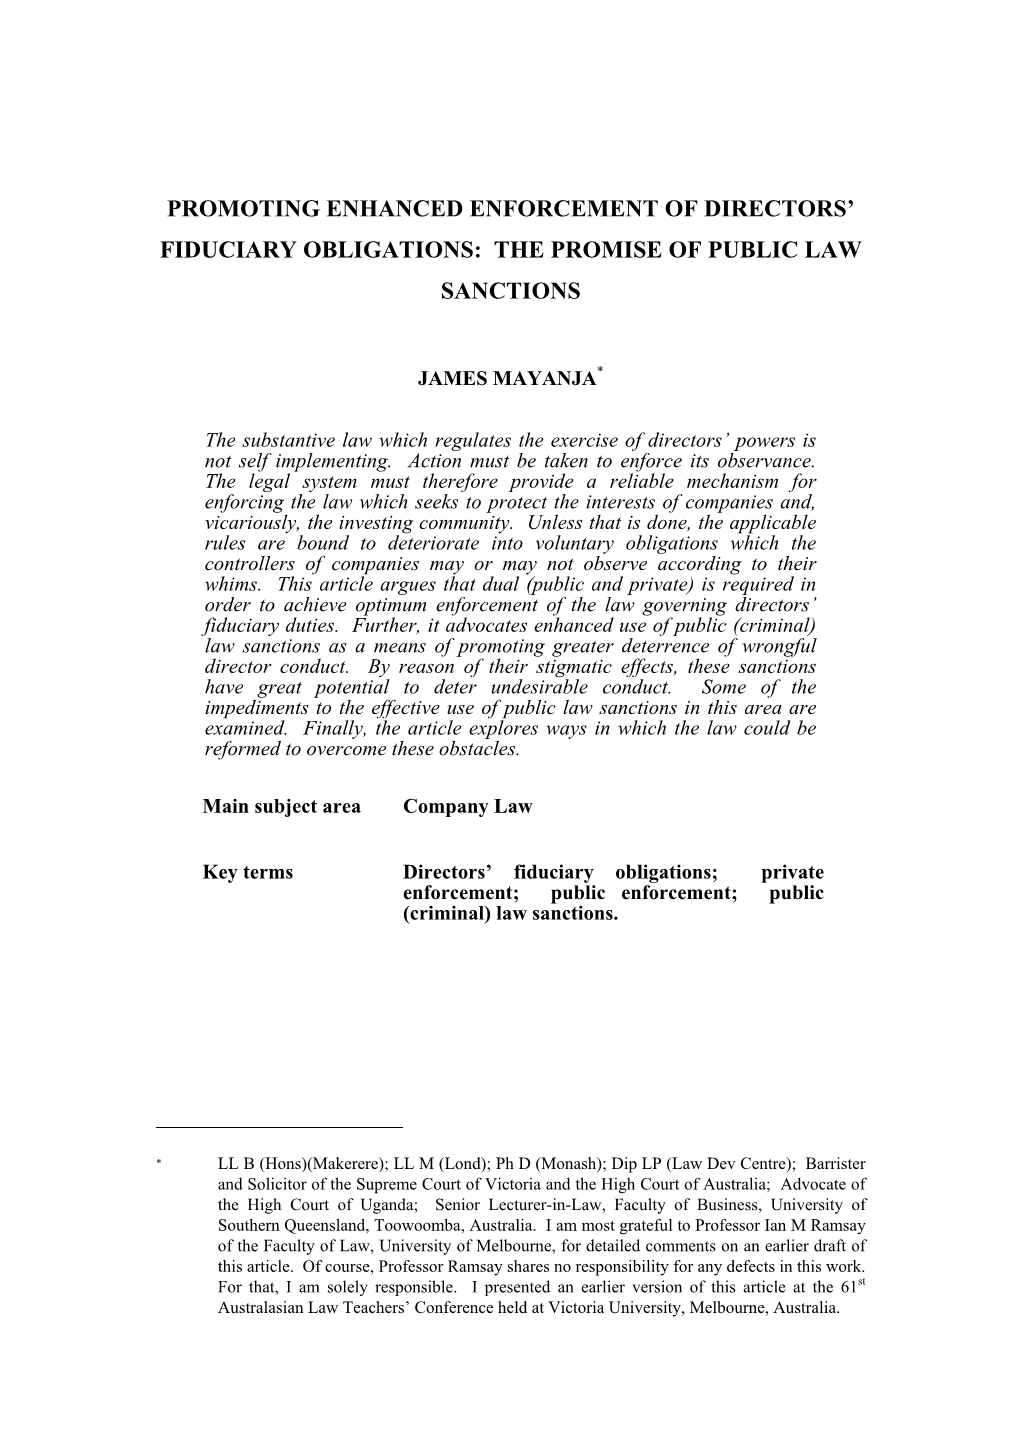 Promoting Enhanced Enforcement of Directors’ Fiduciary Obligations: the Promise of Public Law Sanctions